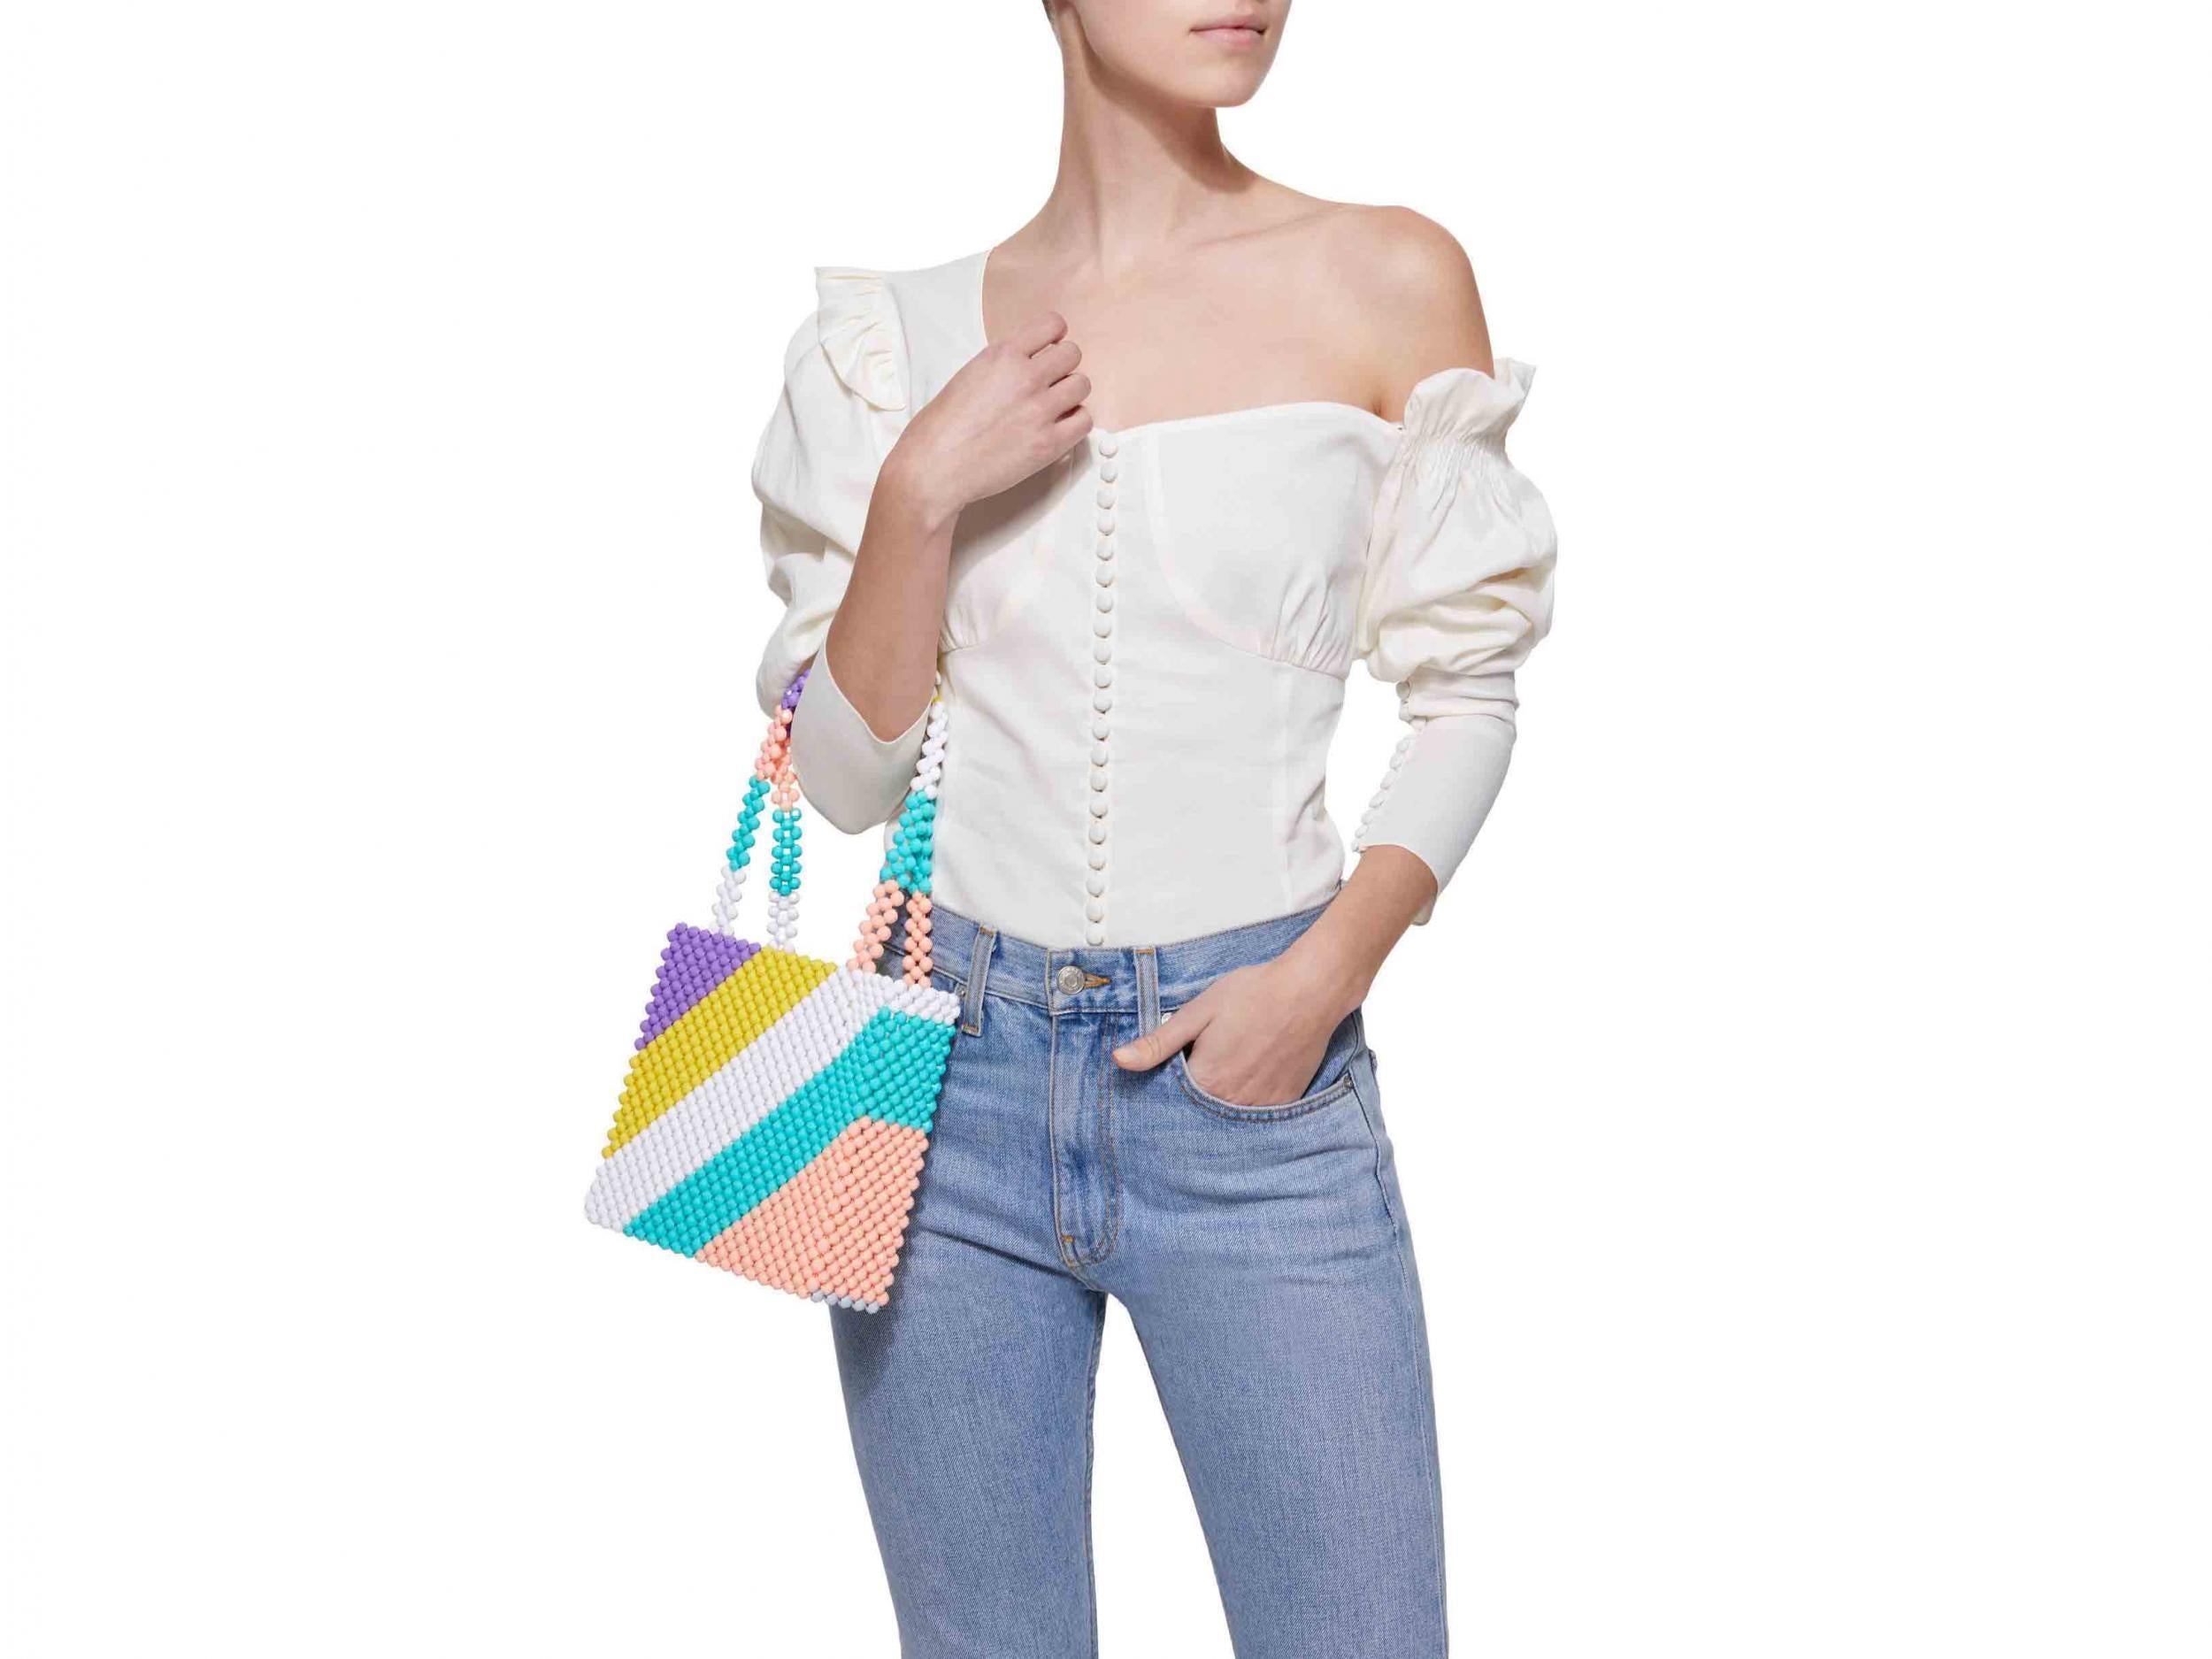 Susan Alexandra’s Granita bag combines the style du jour with fun spring pastels